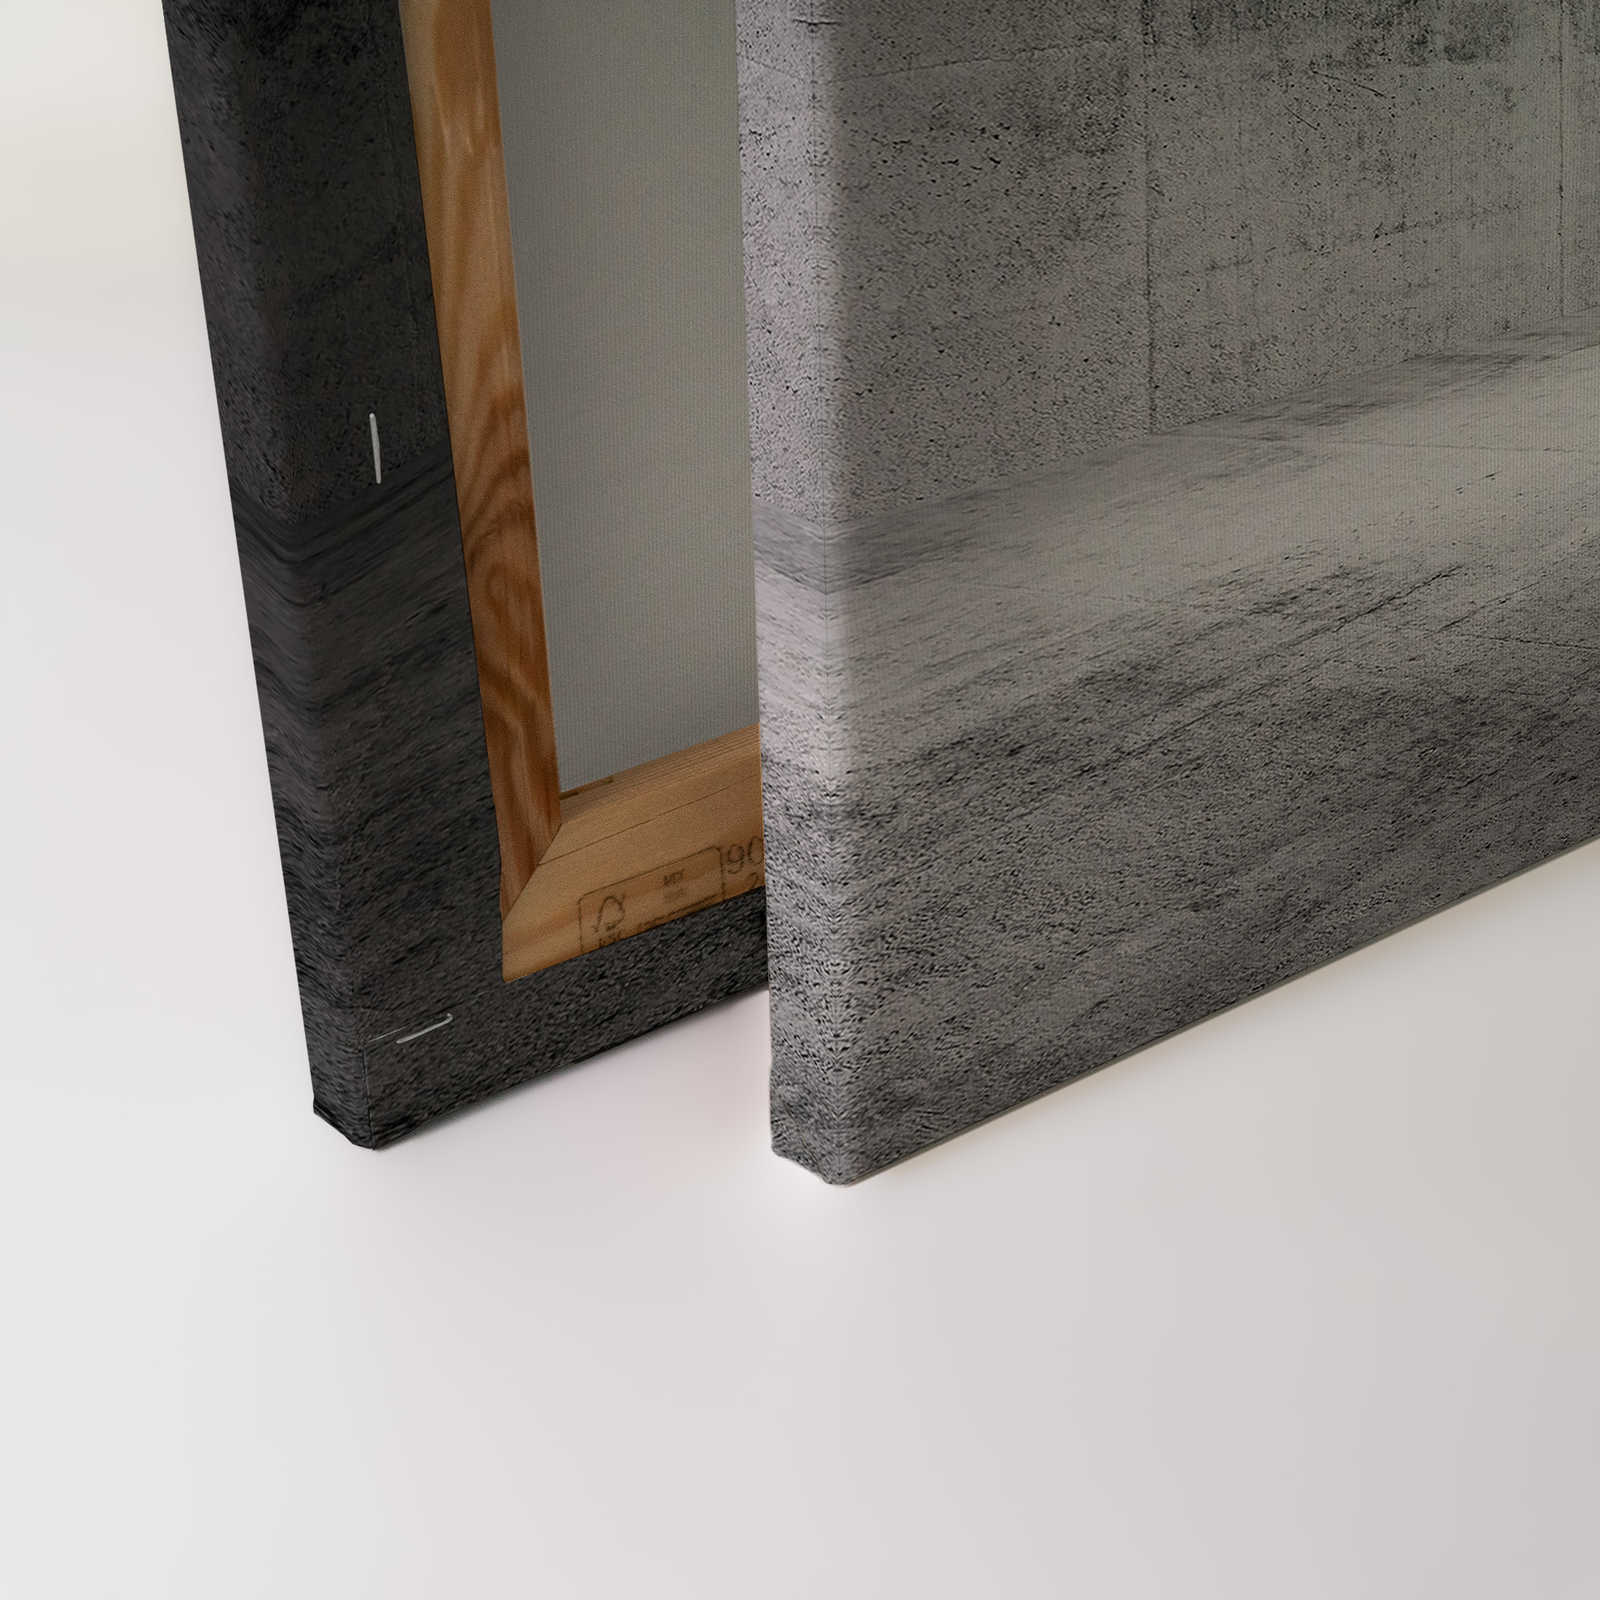             Leinwandbild Beton-Raum mit 3D-Wirkung – 0,90 m x 0,60 m
        